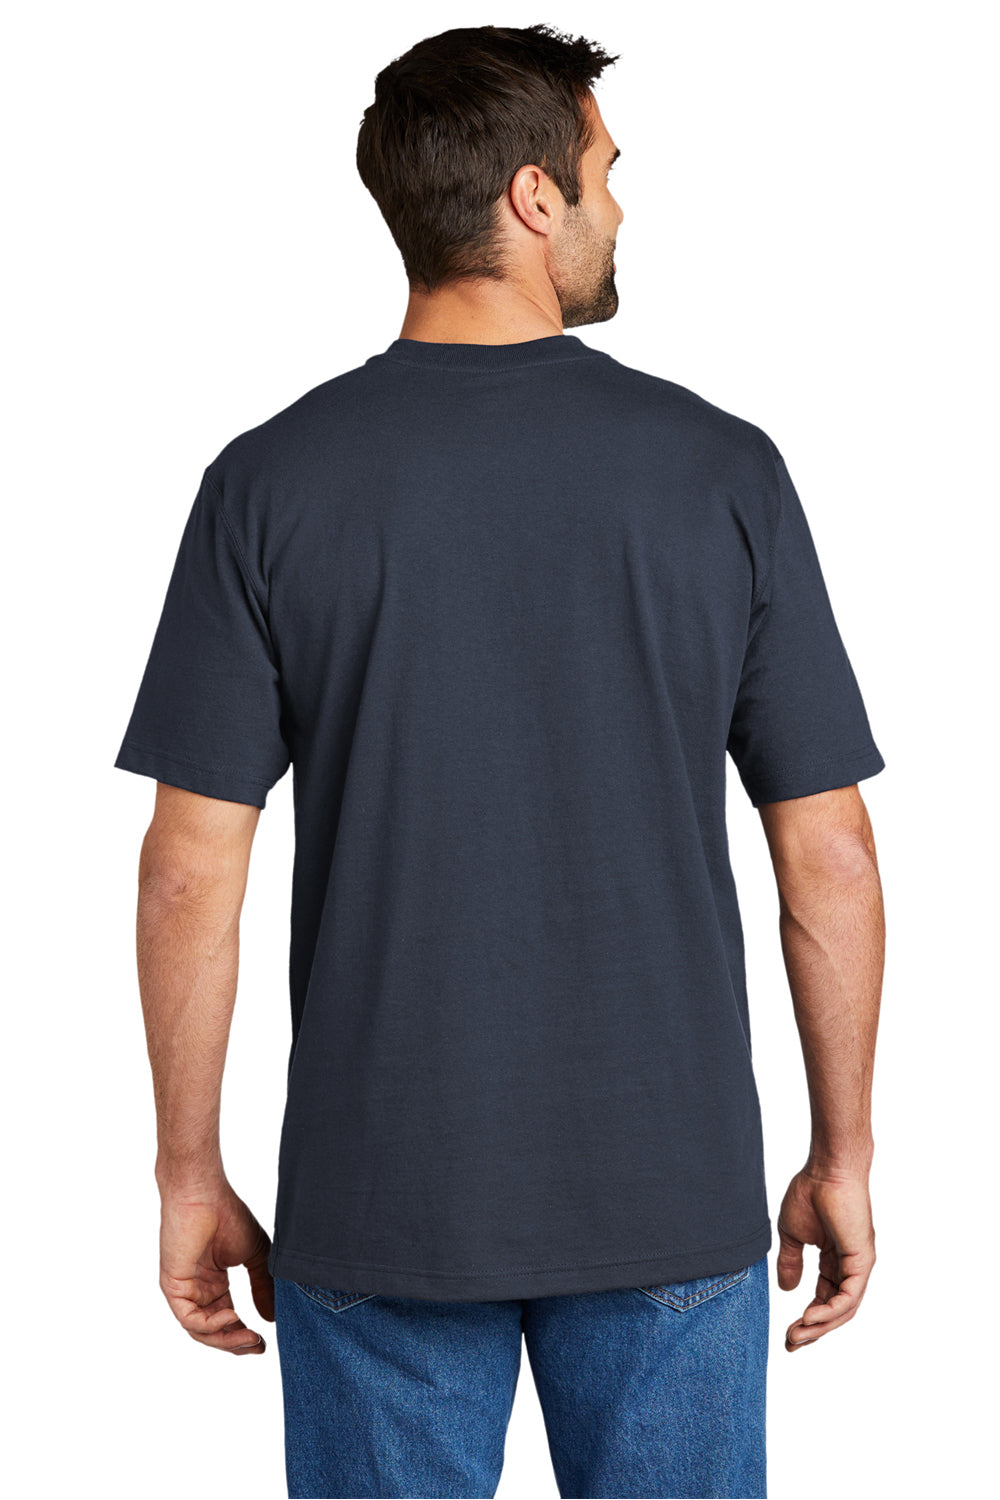 Carhartt CTK84 Mens Short Sleeve Henley T-Shirt w/ Pocket Navy Blue Model Back